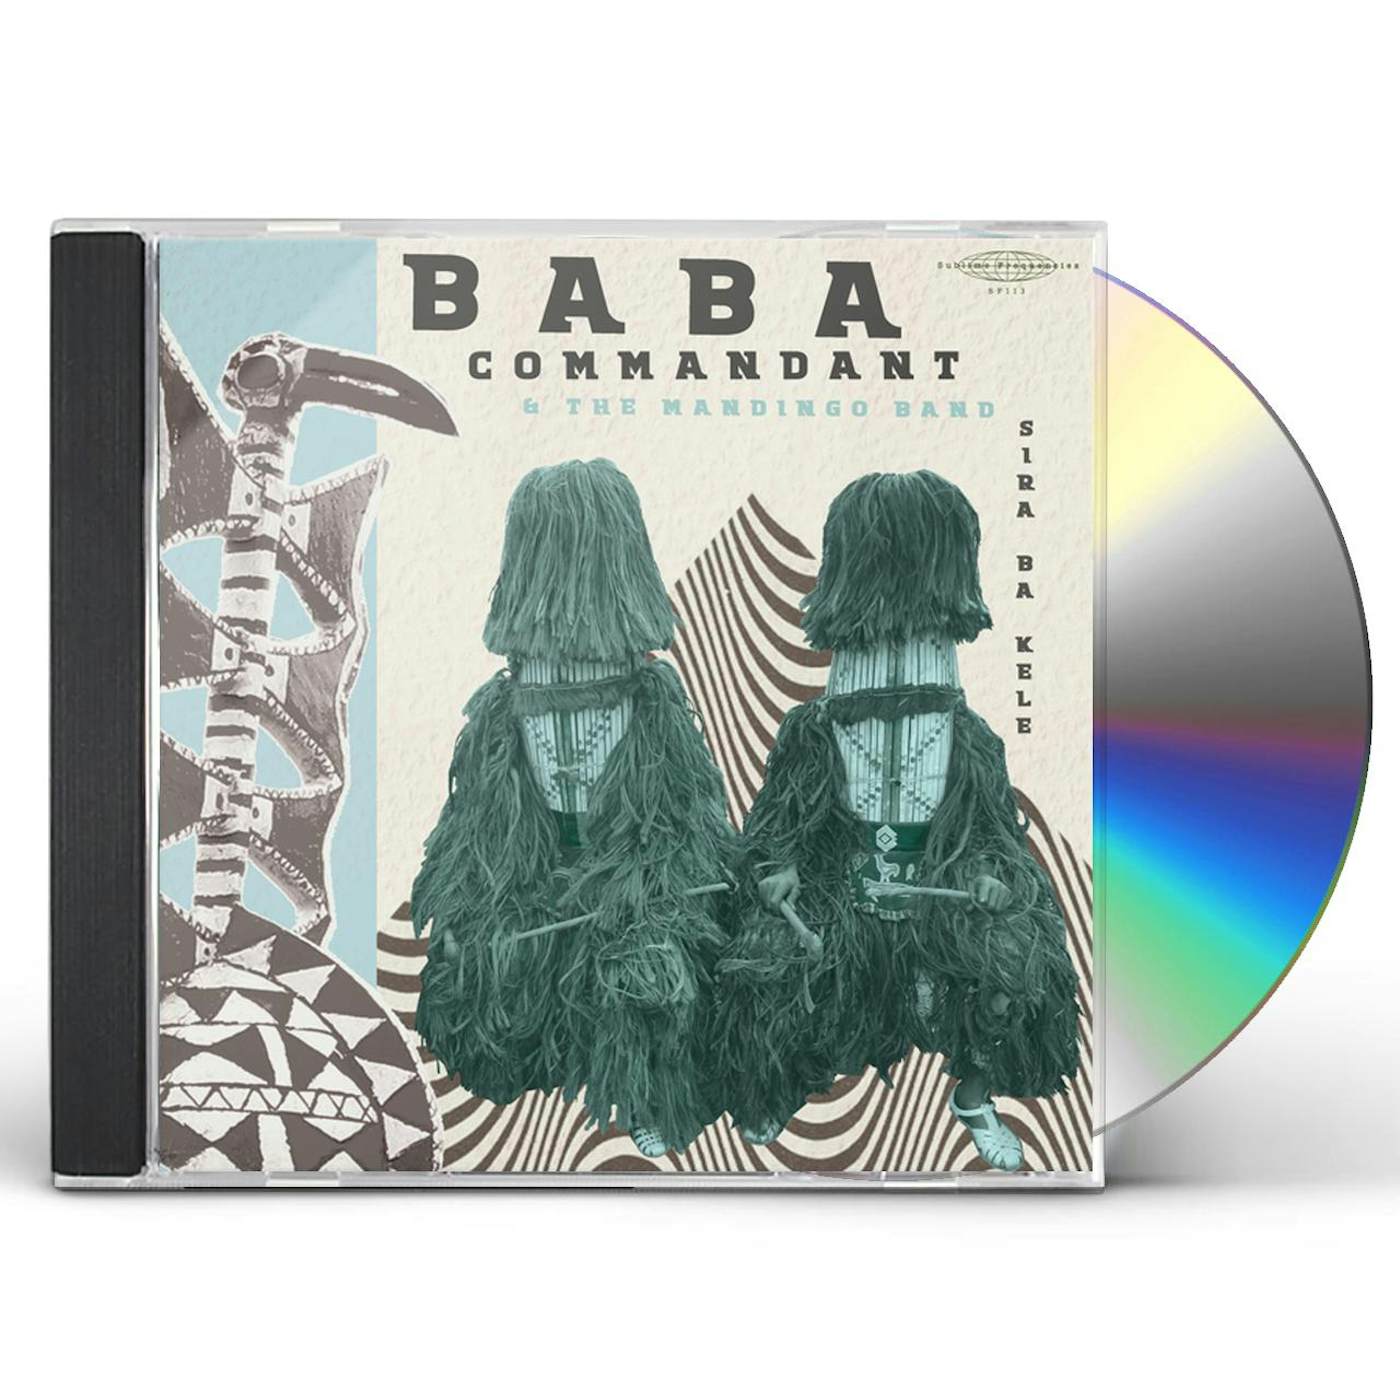 Baba Commandant And The Mandingo Band SIRI BA KELE CD